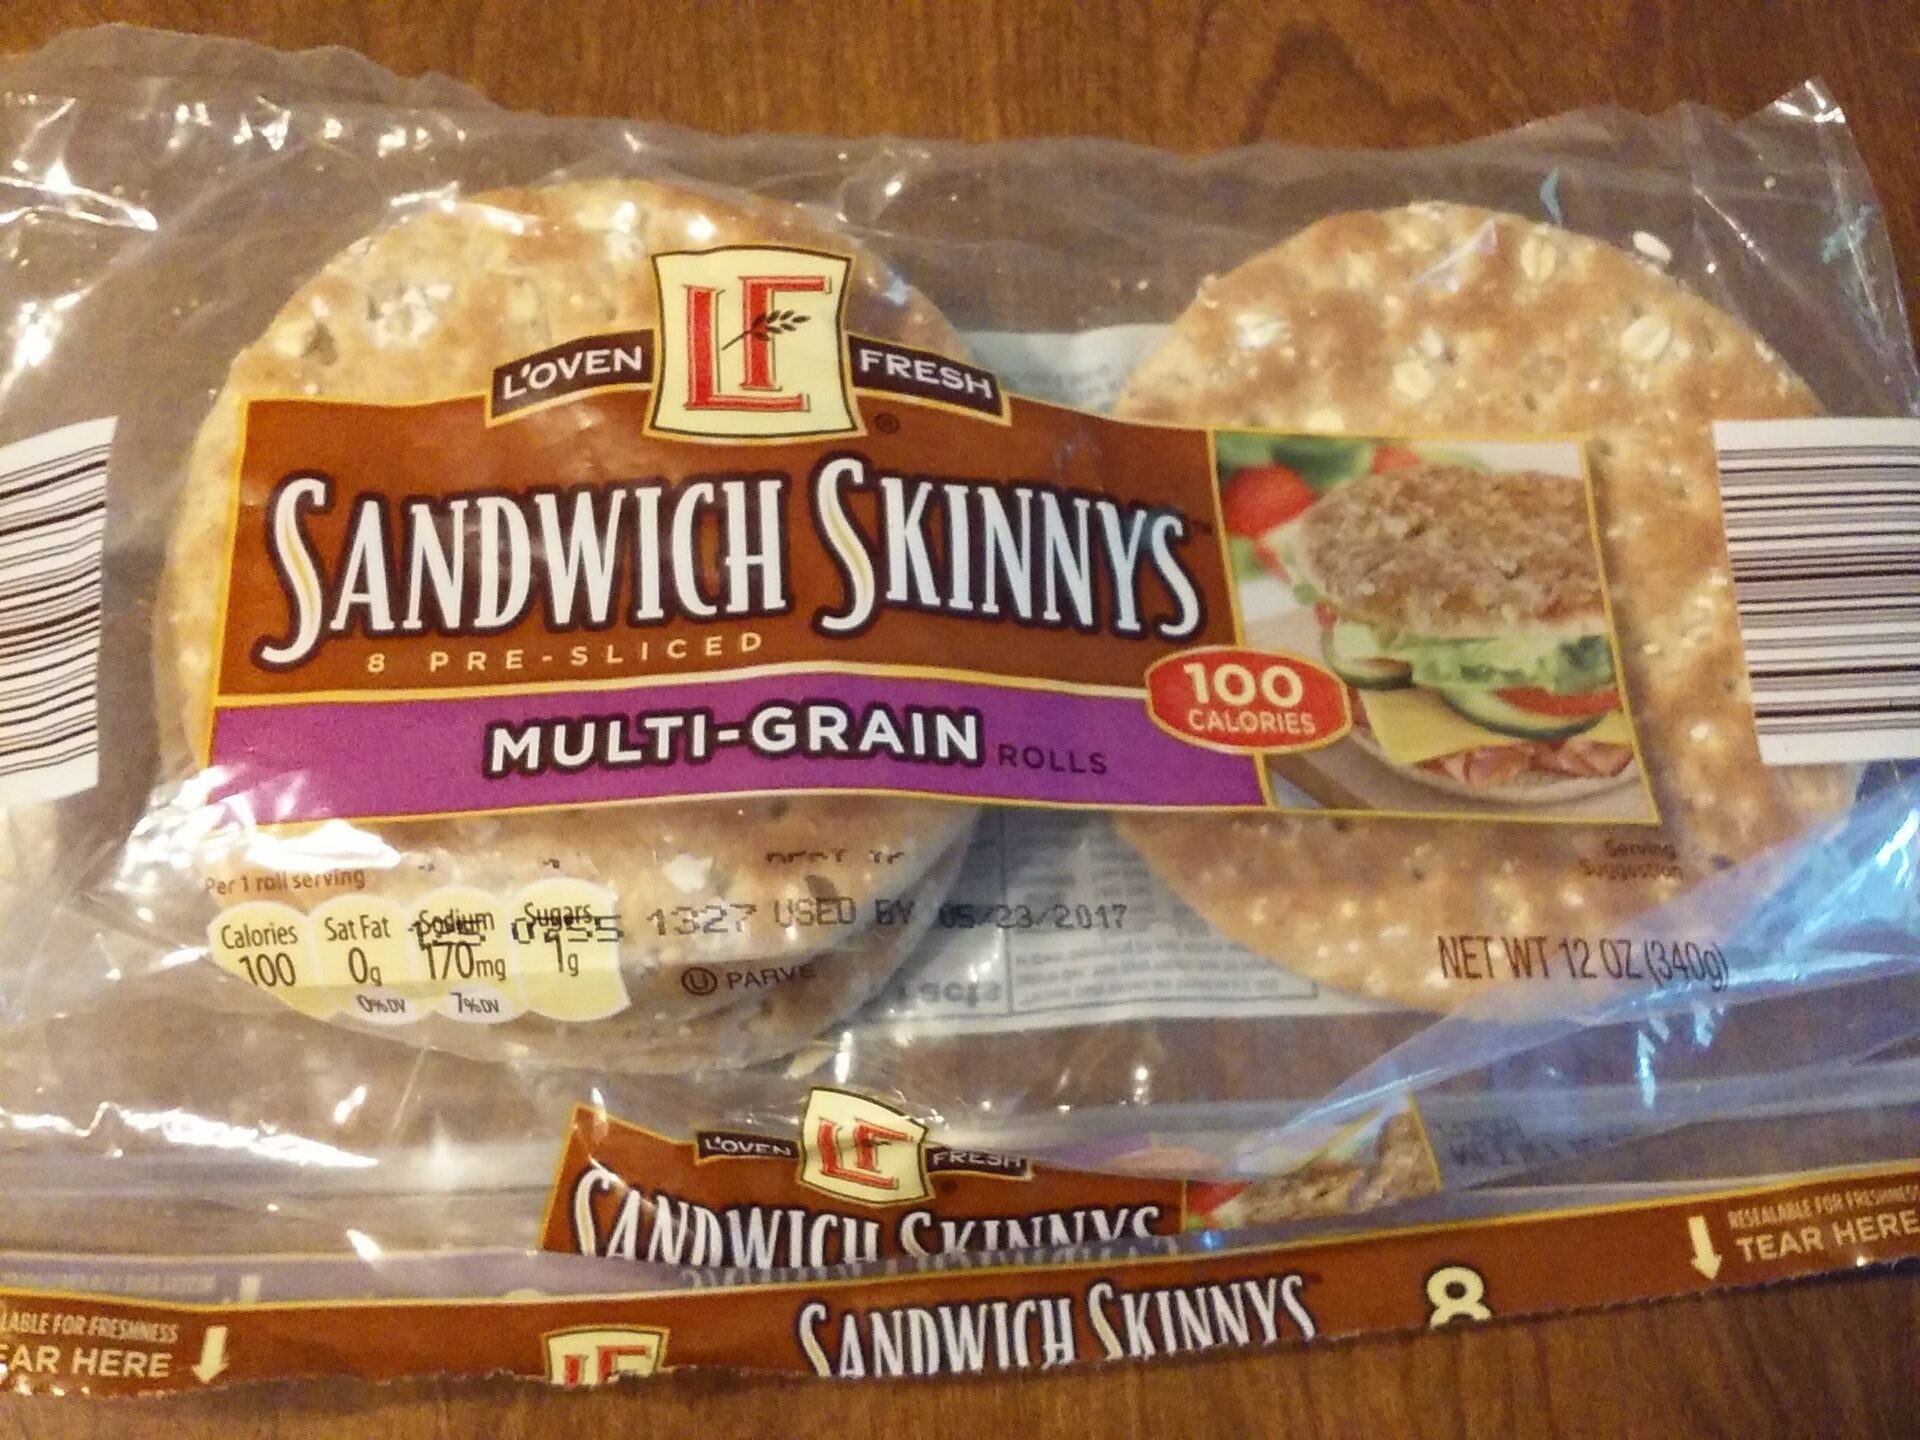 L’Oven Fresh Sandwich Skinnys